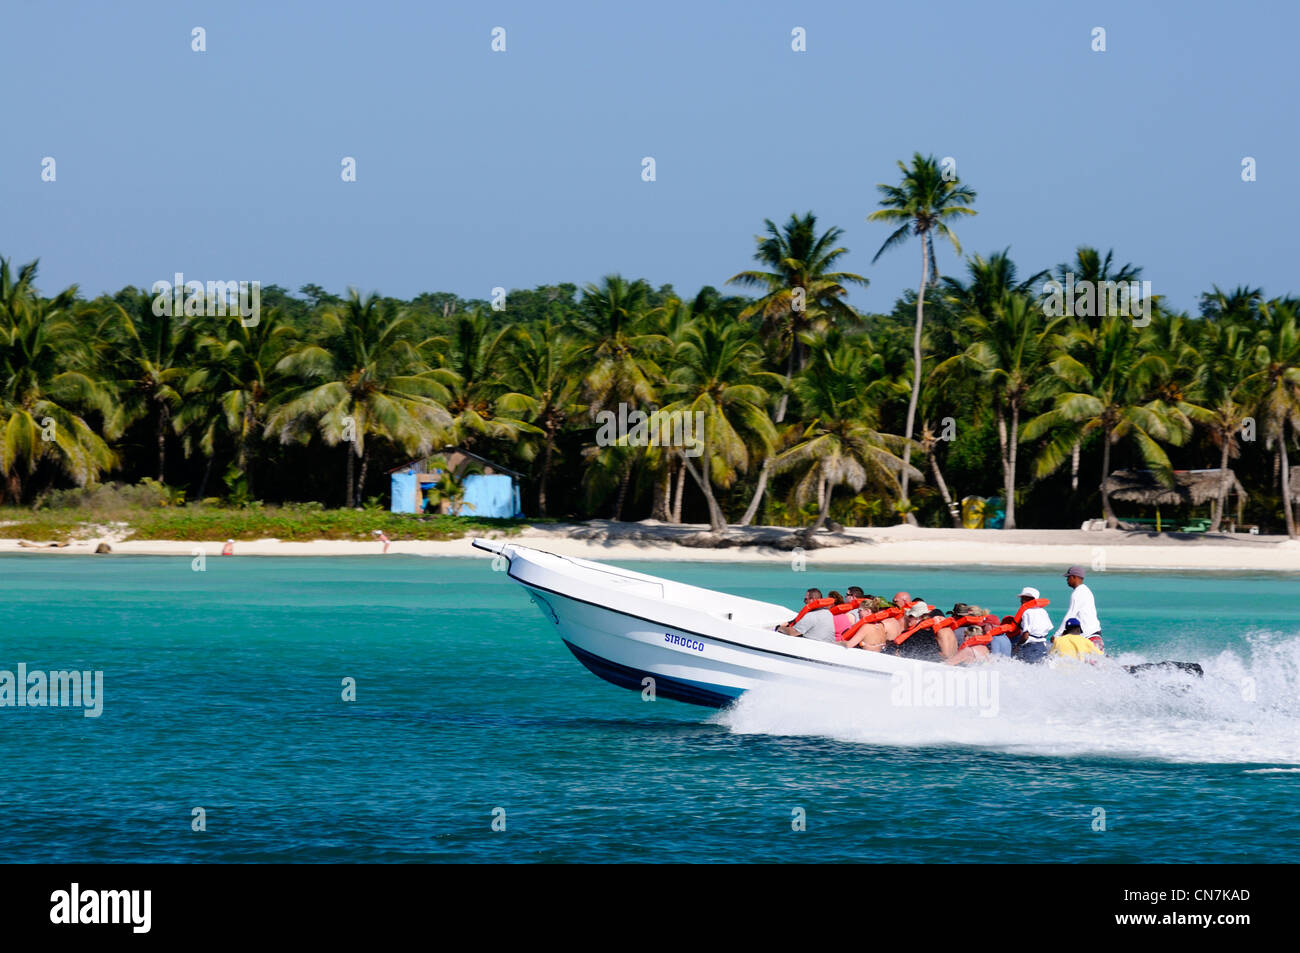 Dominican Republic, La Romana province, Bayahibe, tourists on excursions to Saona Island on a speedboat in the Caribbean Sea Stock Photo